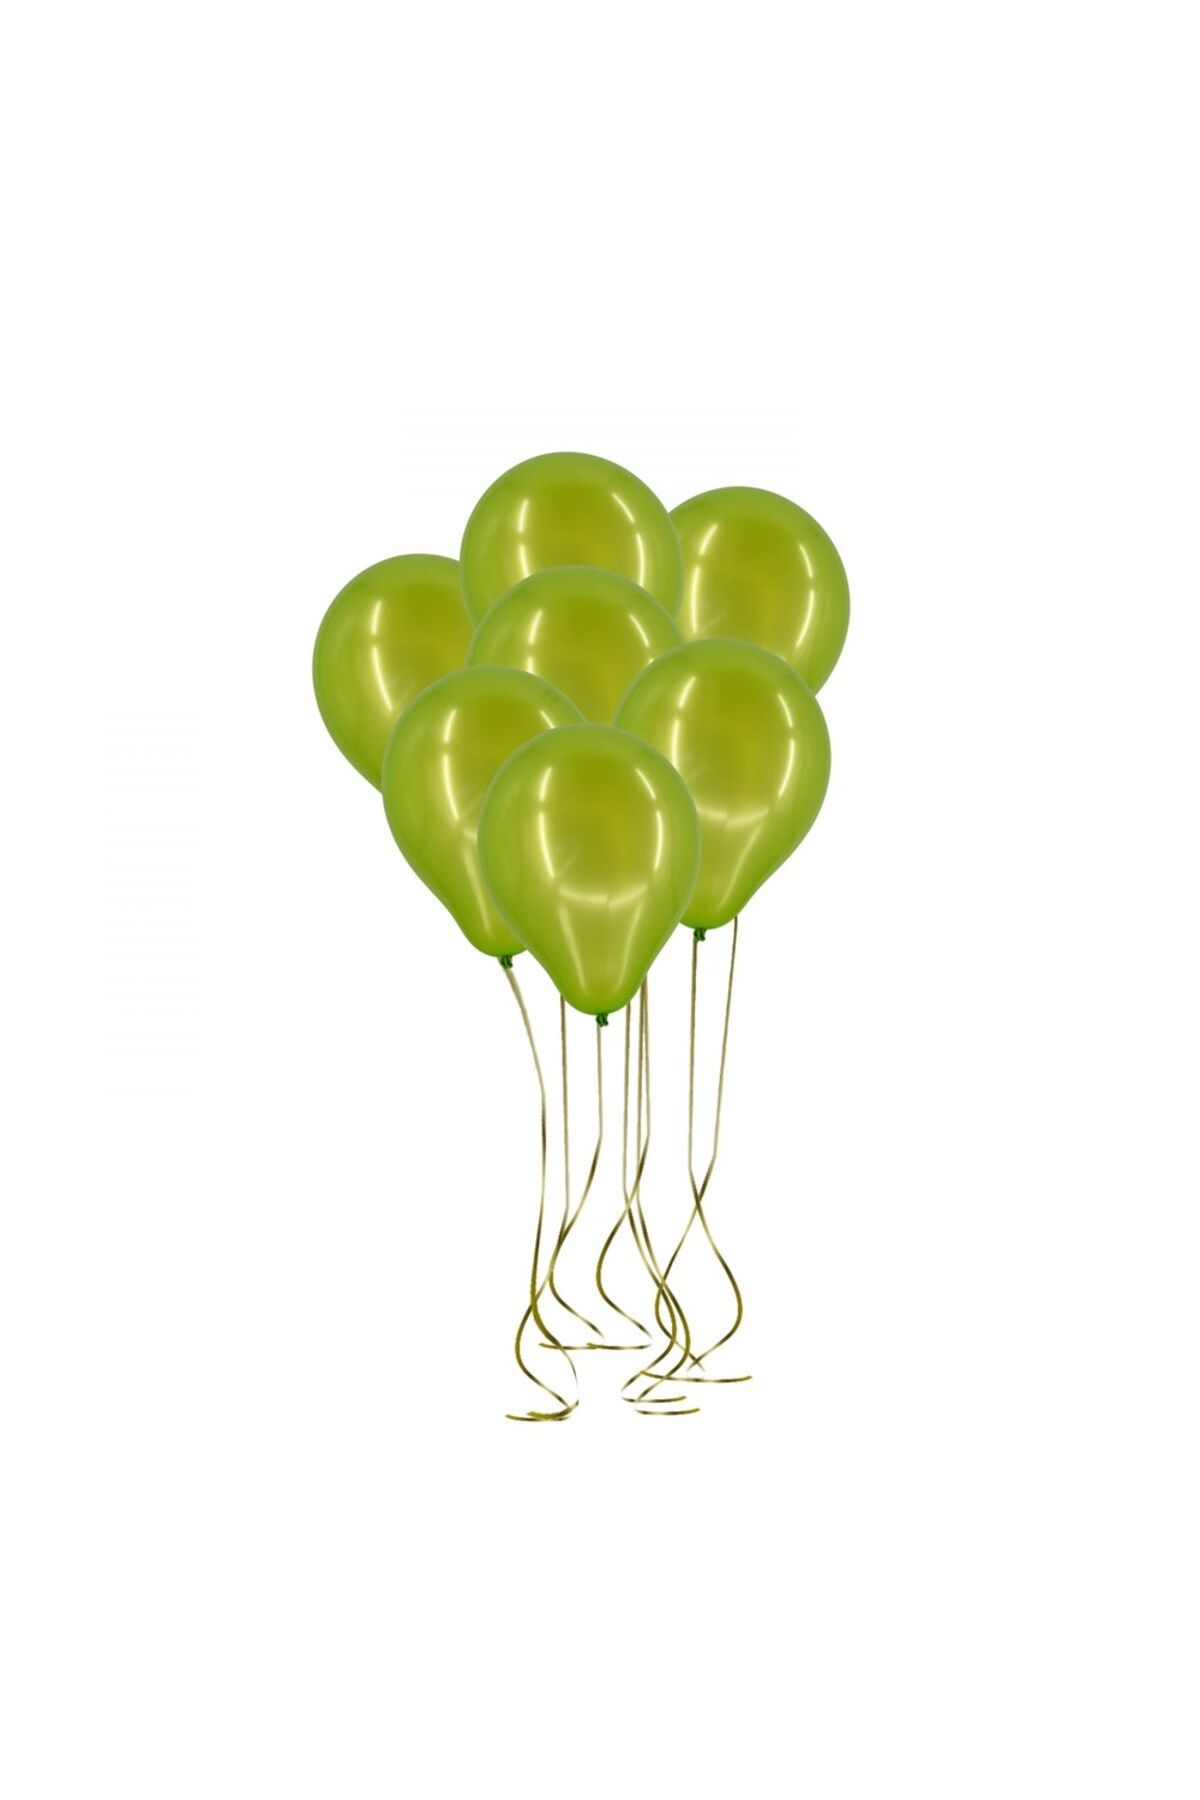 Cansüs 400lü Metalik Balon Yeşil 12inç